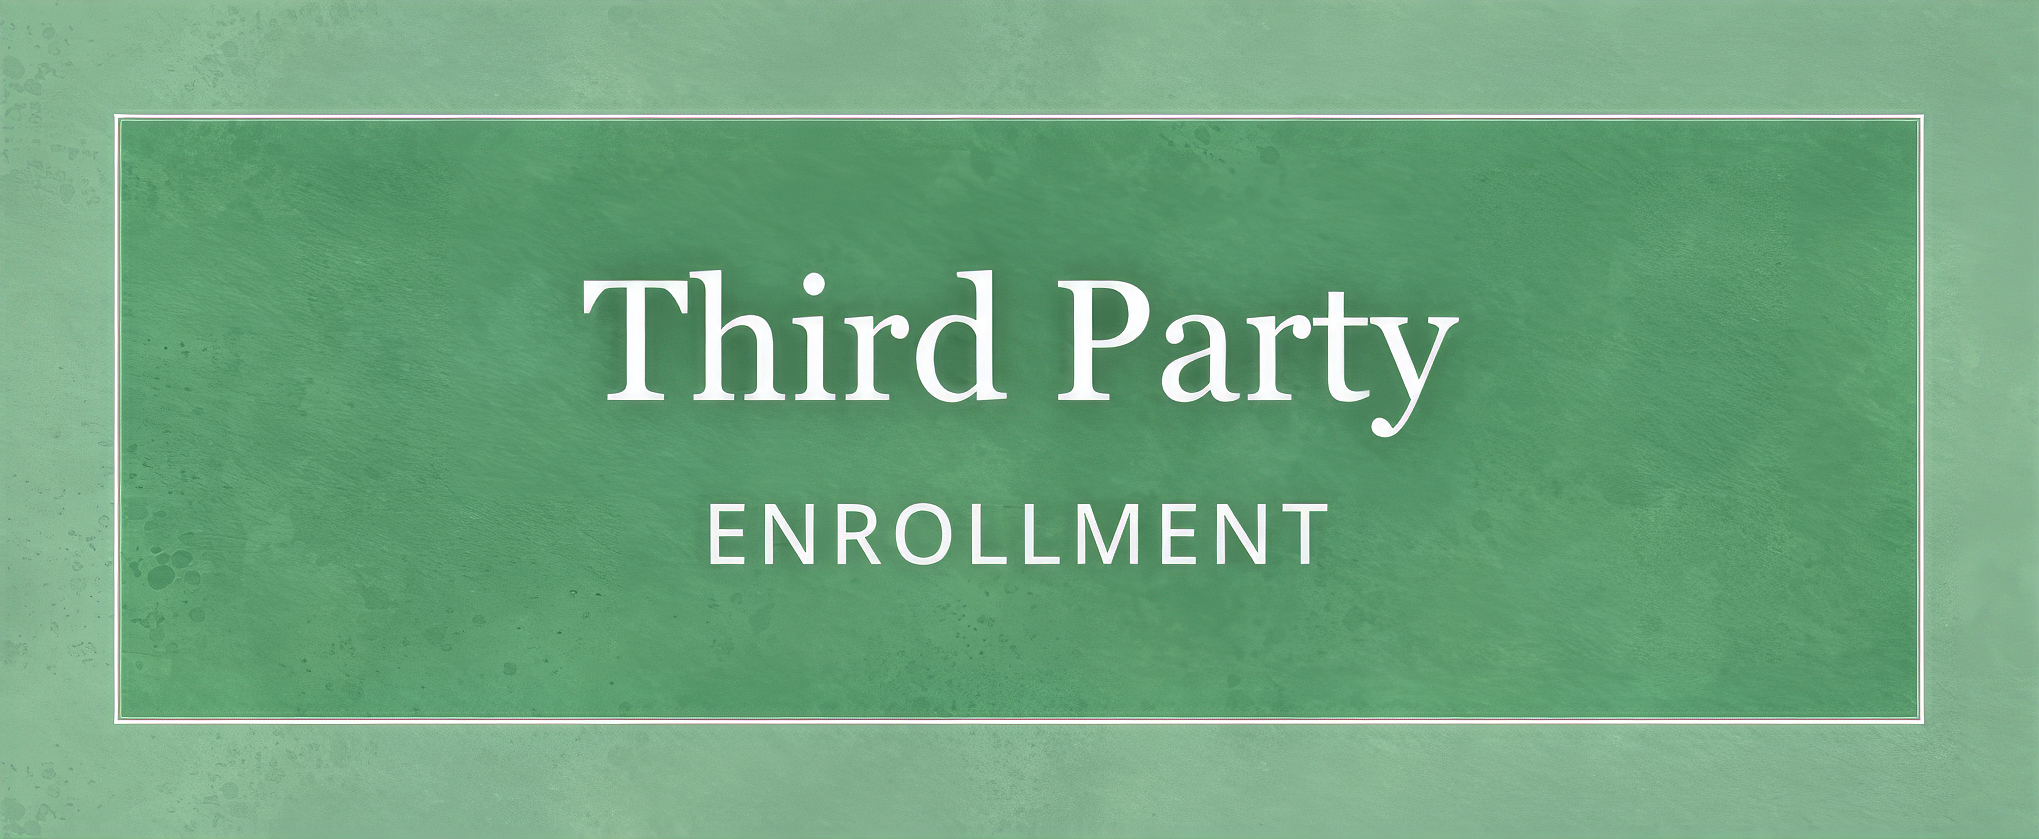 Third Party Enrollment